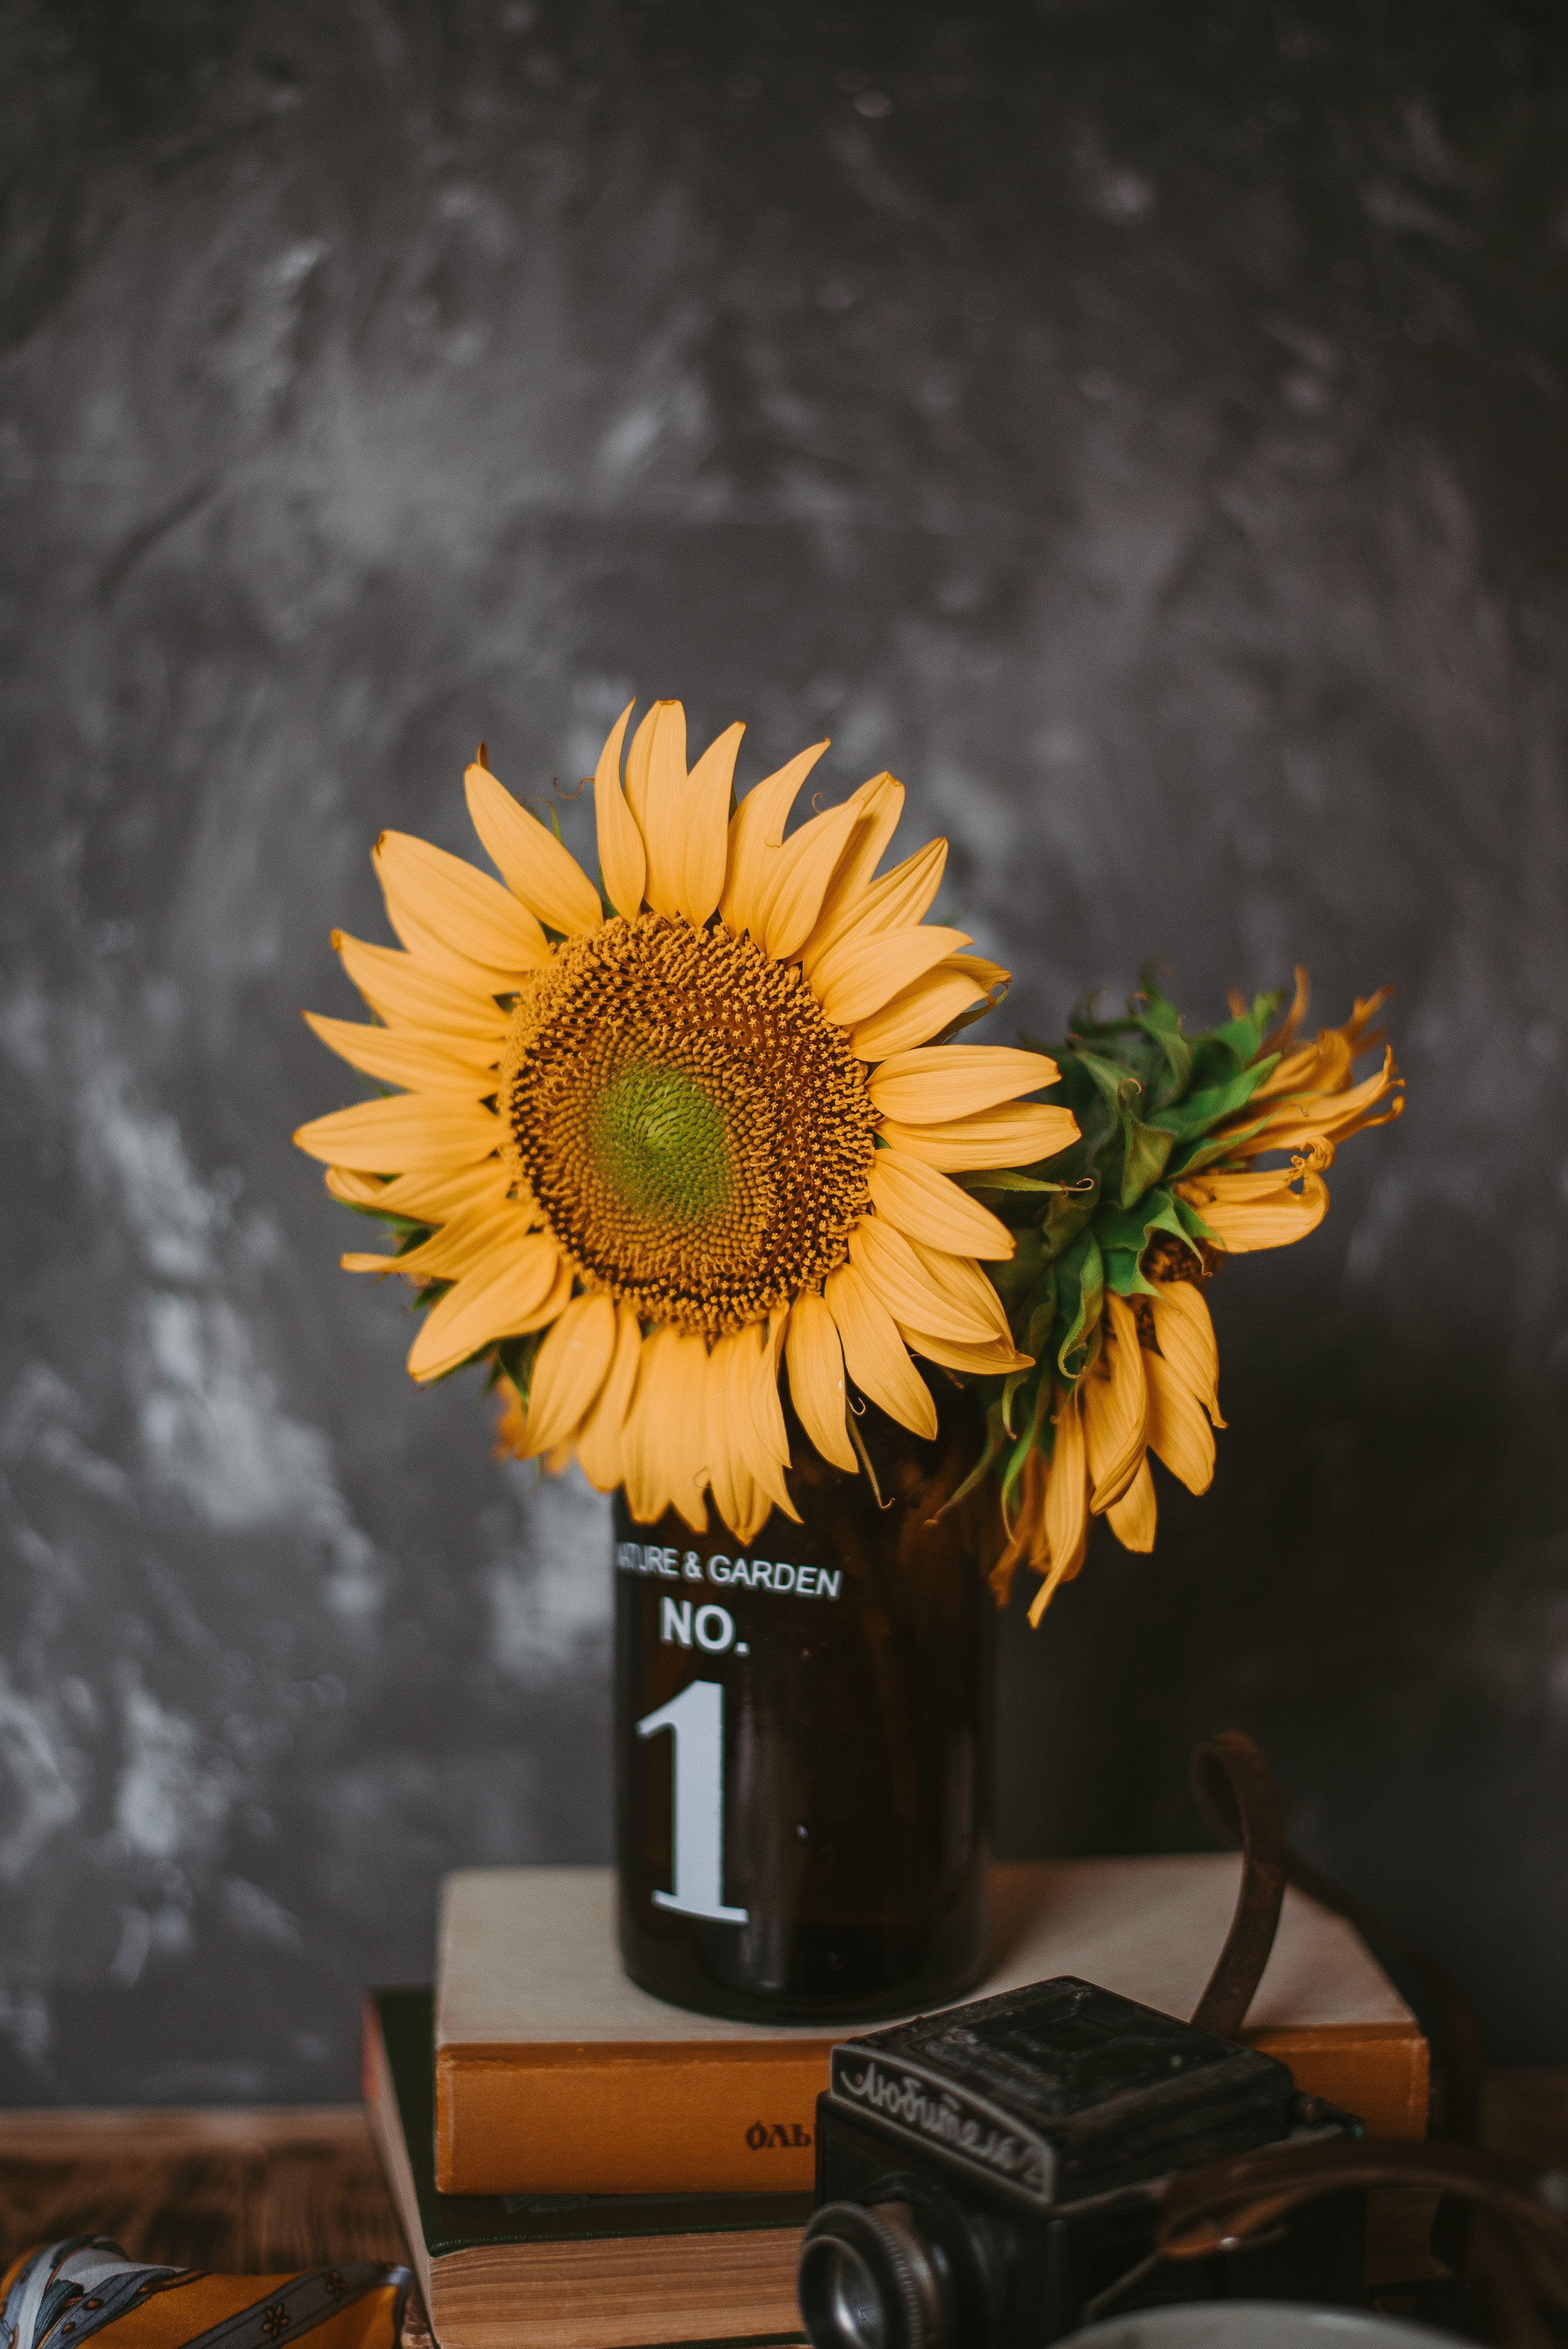 miscellanea, books, sunflowers, flowers, miscellaneous, vase, camera